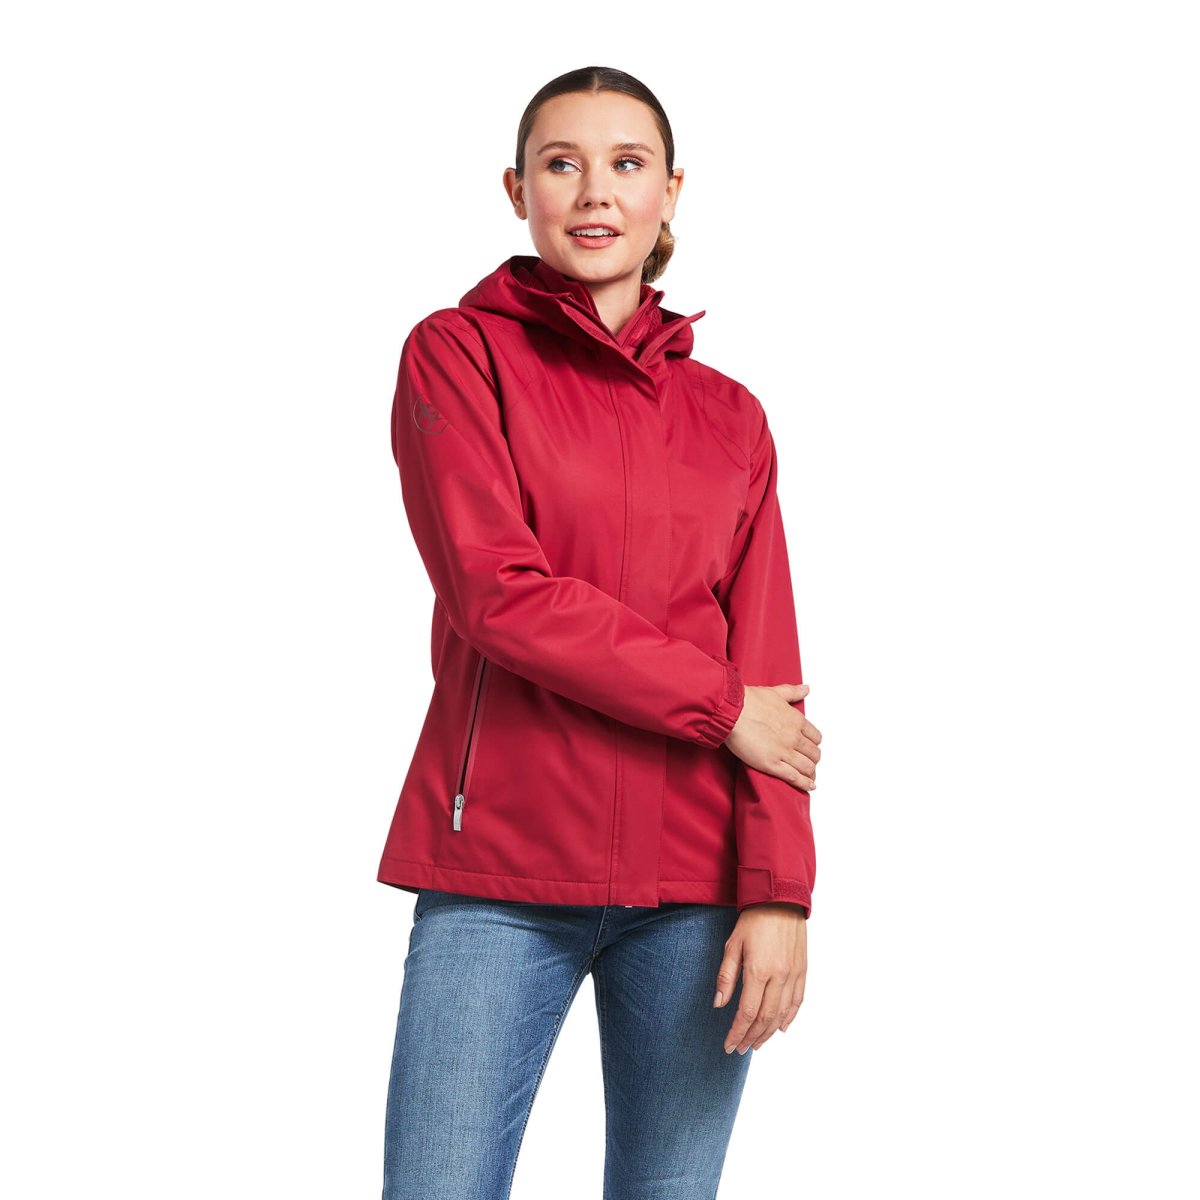 Ariat Womens Spectator Waterproof Jacket - Red Bud - Large